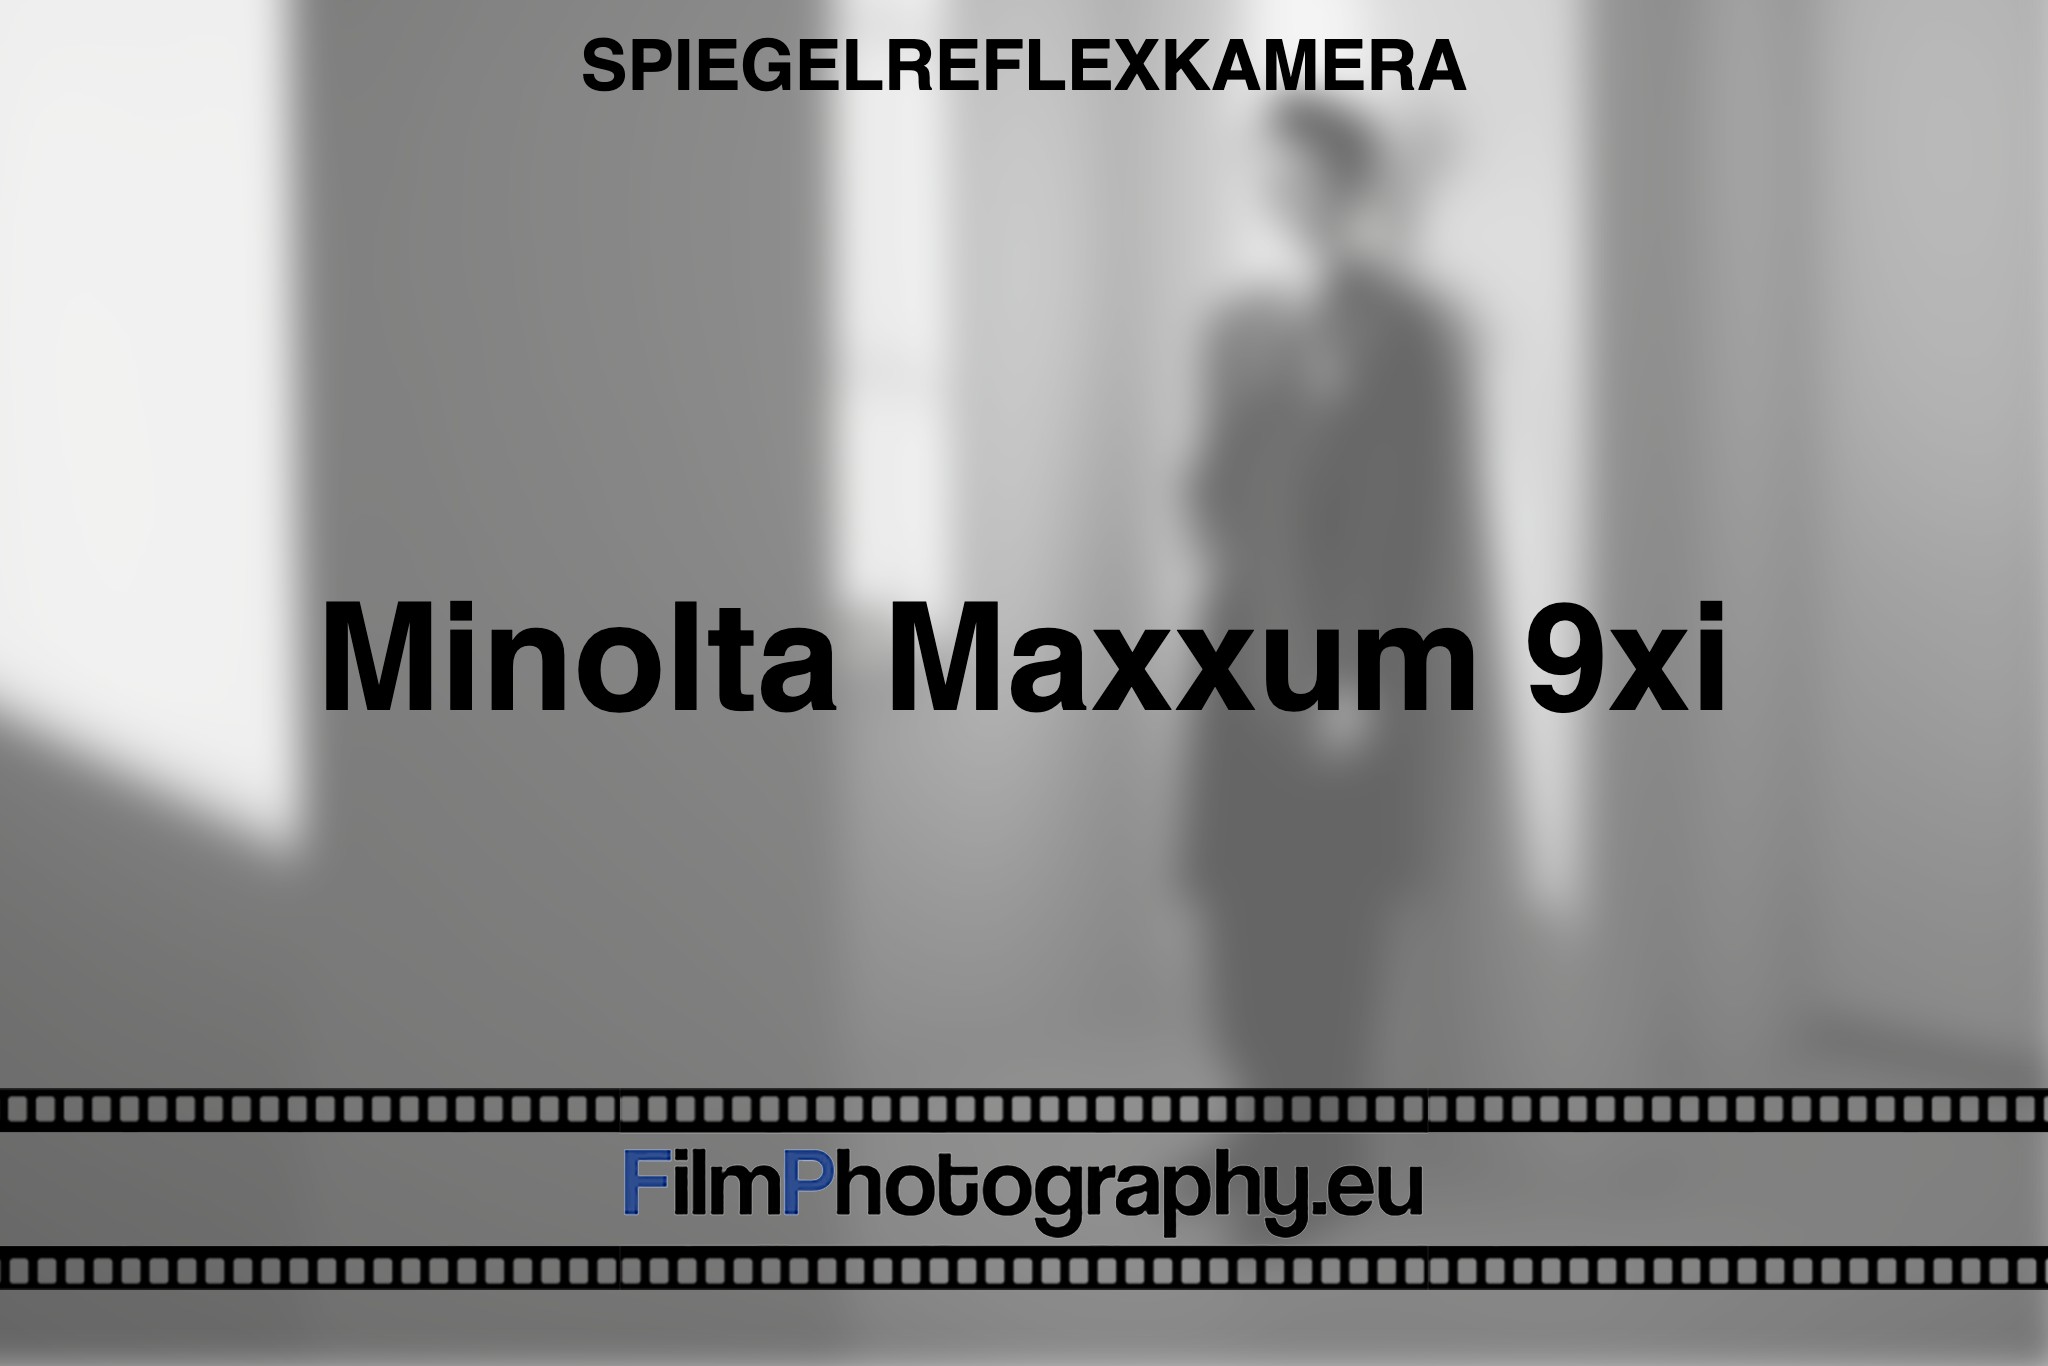 minolta-maxxum-9xi-spiegelreflexkamera-bnv